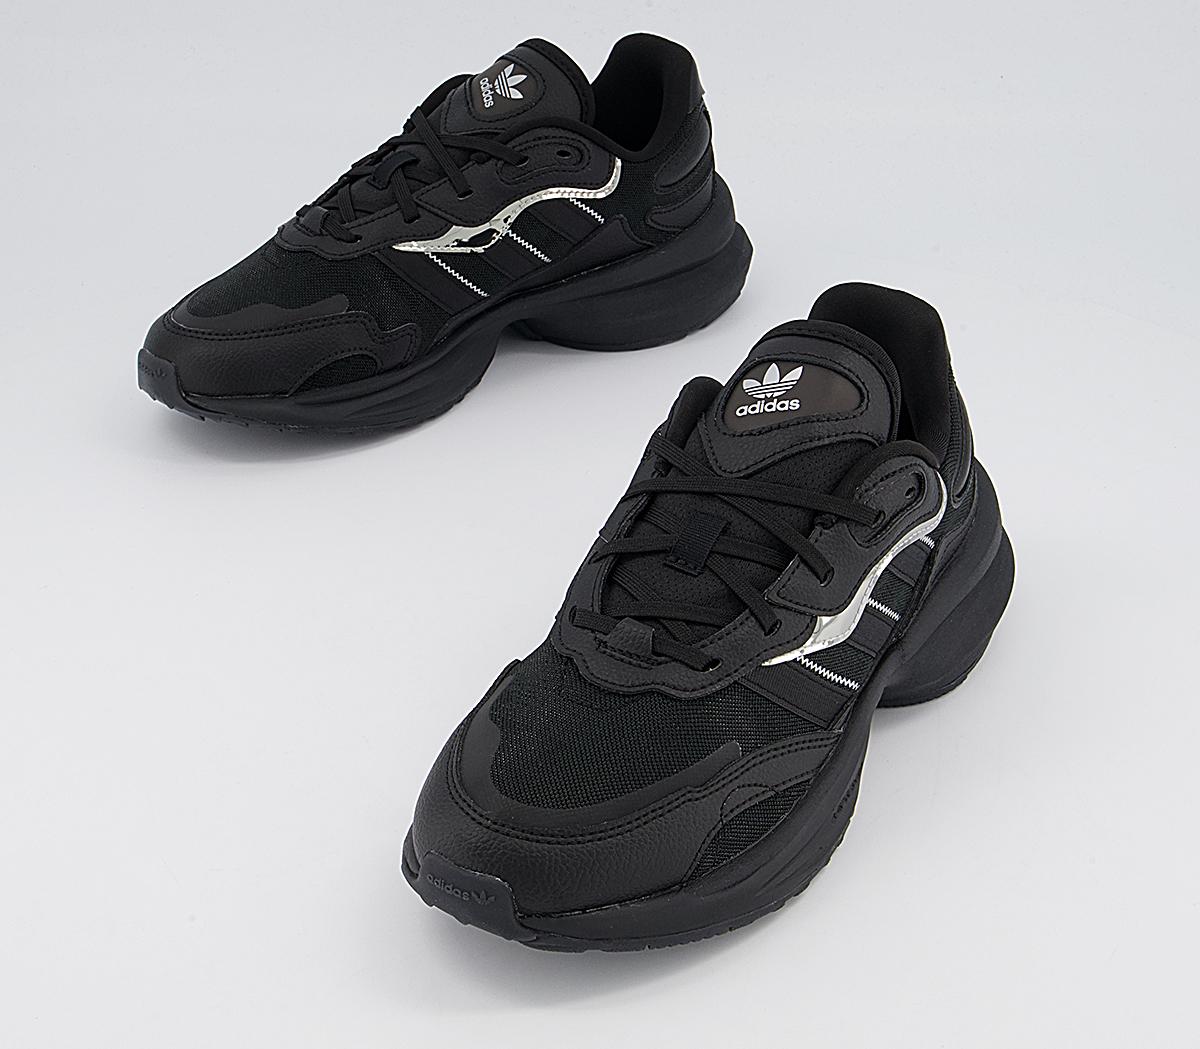 adidas Zentic Trainers Black Silver Metallic White - Women's Trainers